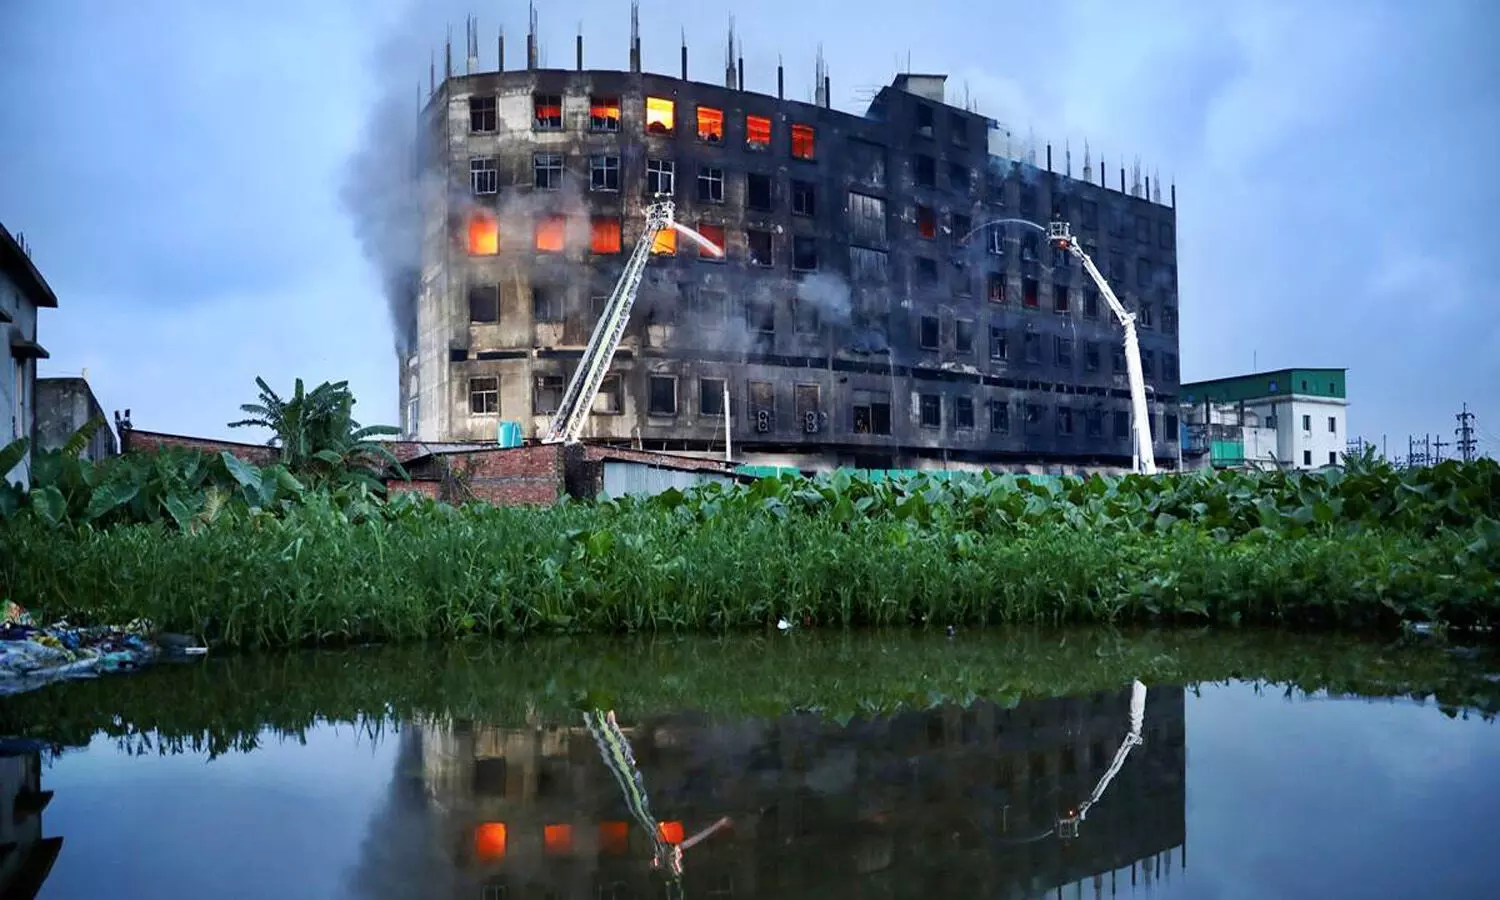 52 dead in Bangladesh factory fire, dozens injured